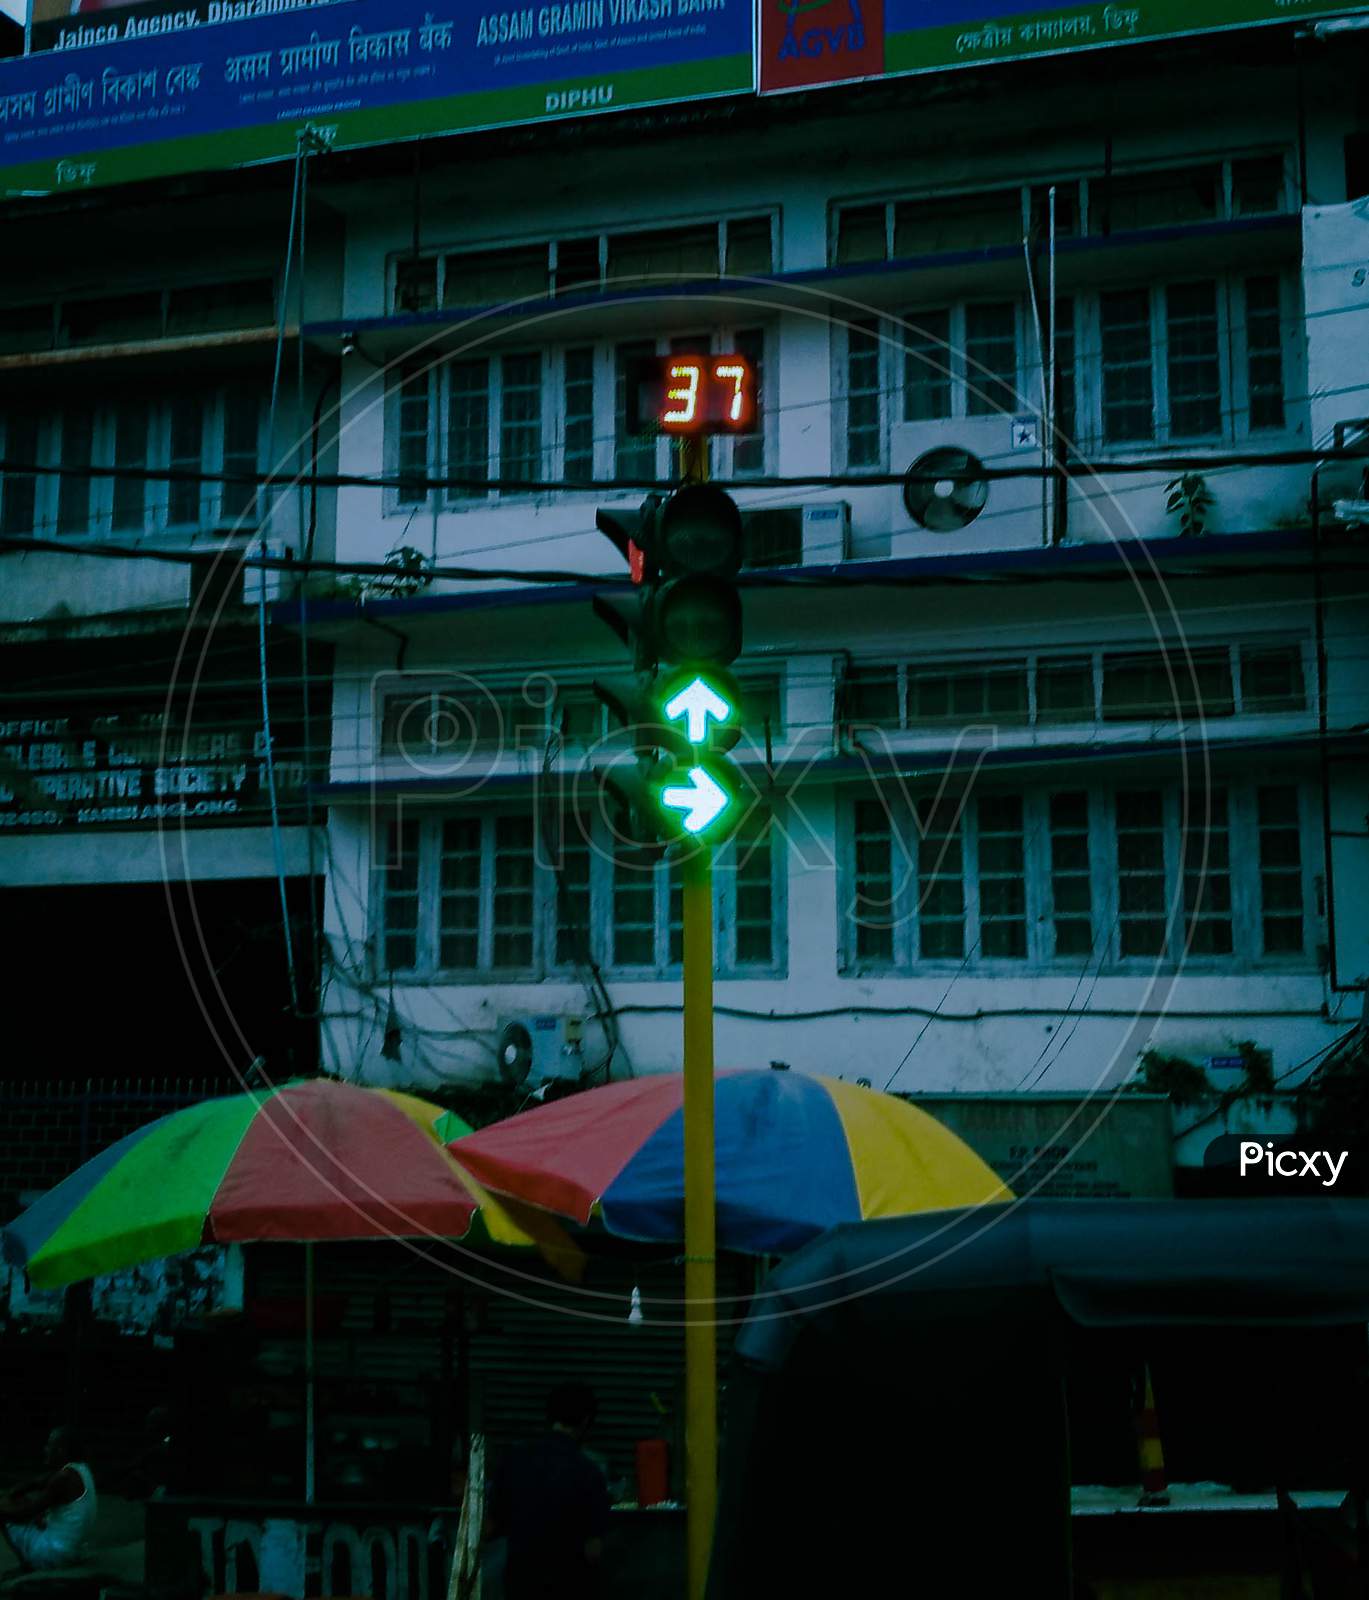 Traffic signal light